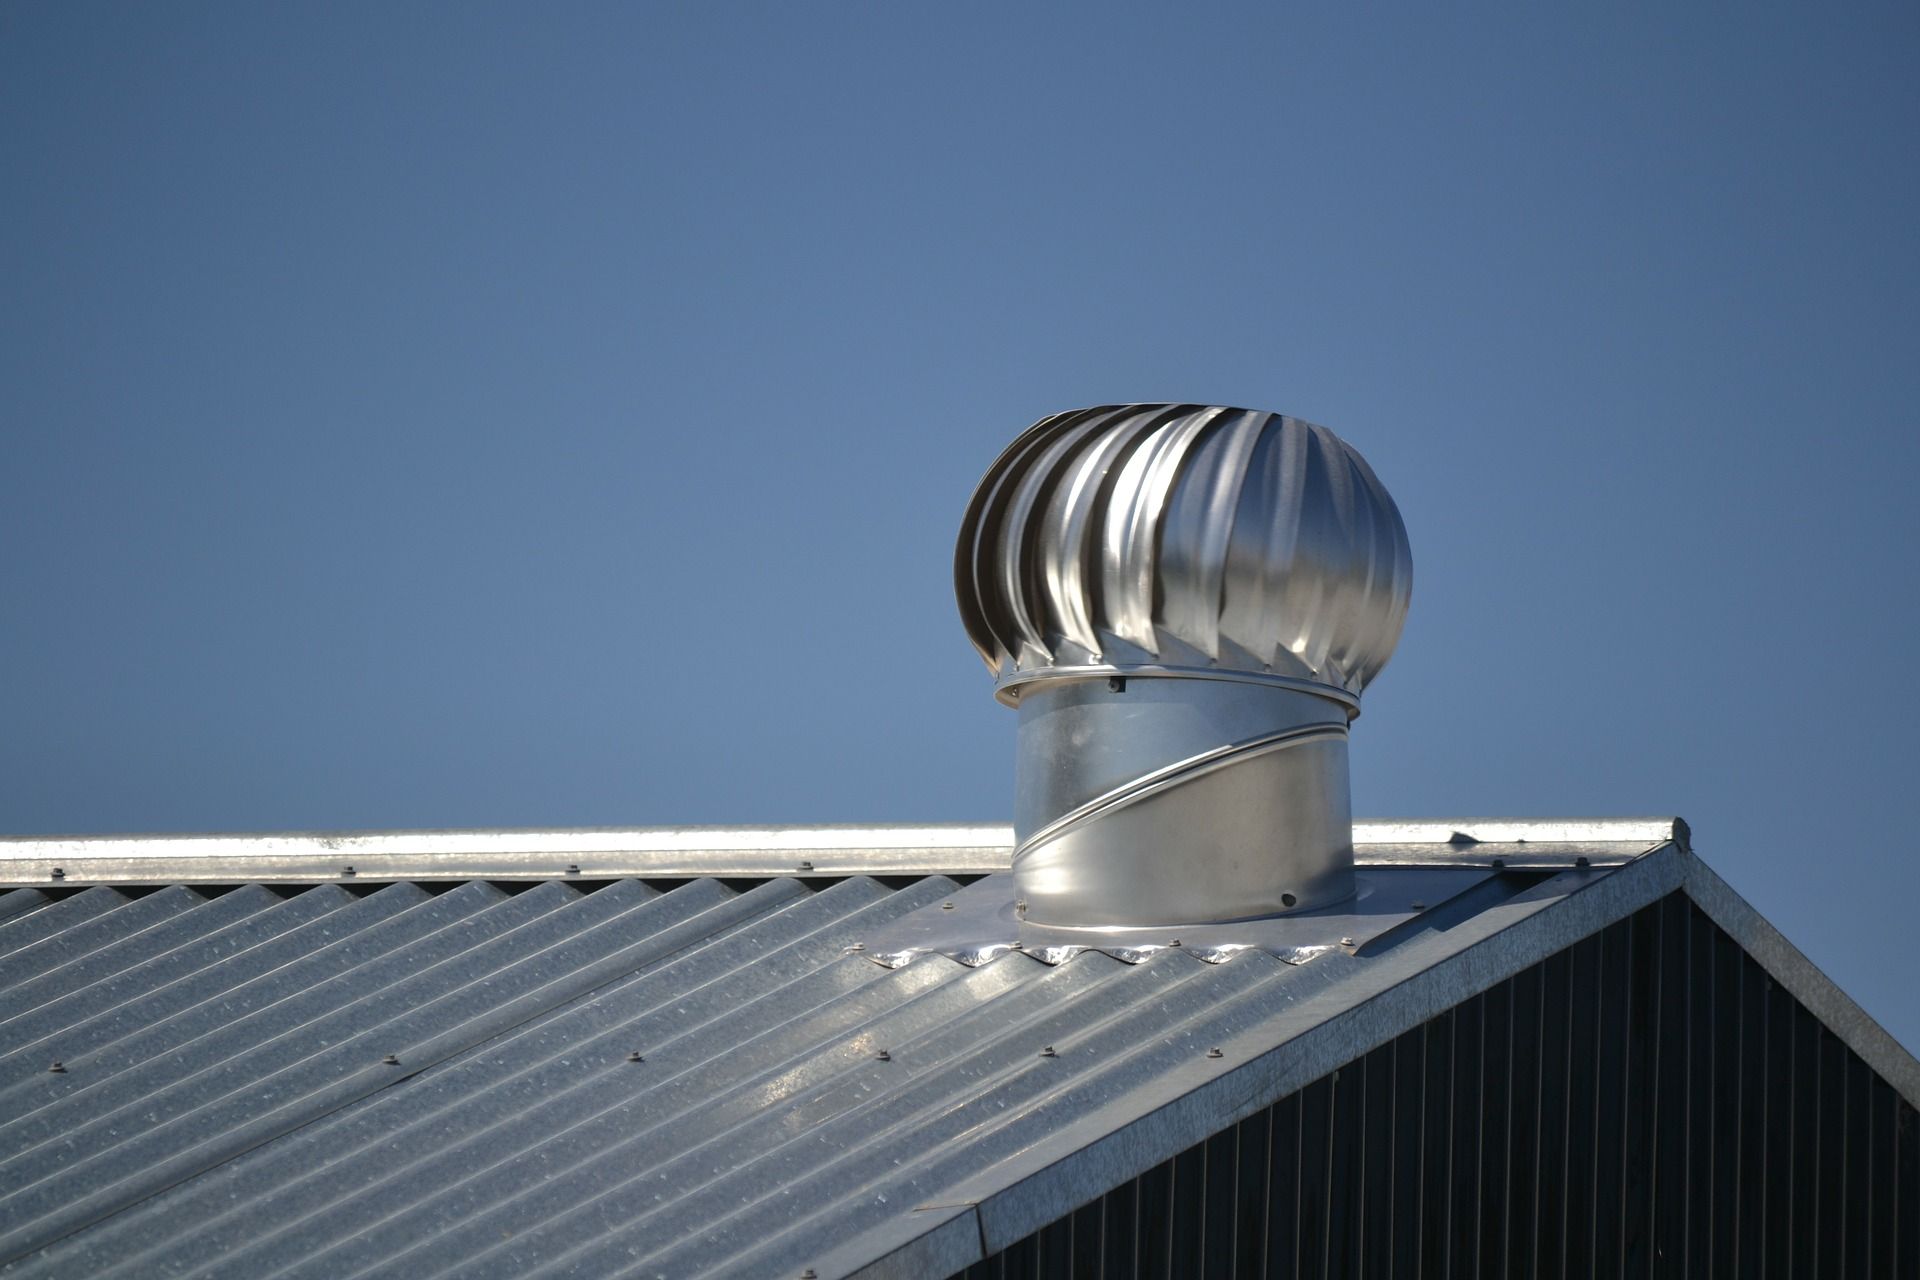 Image of a shiny turbine roof vent on a shiny metal roof.